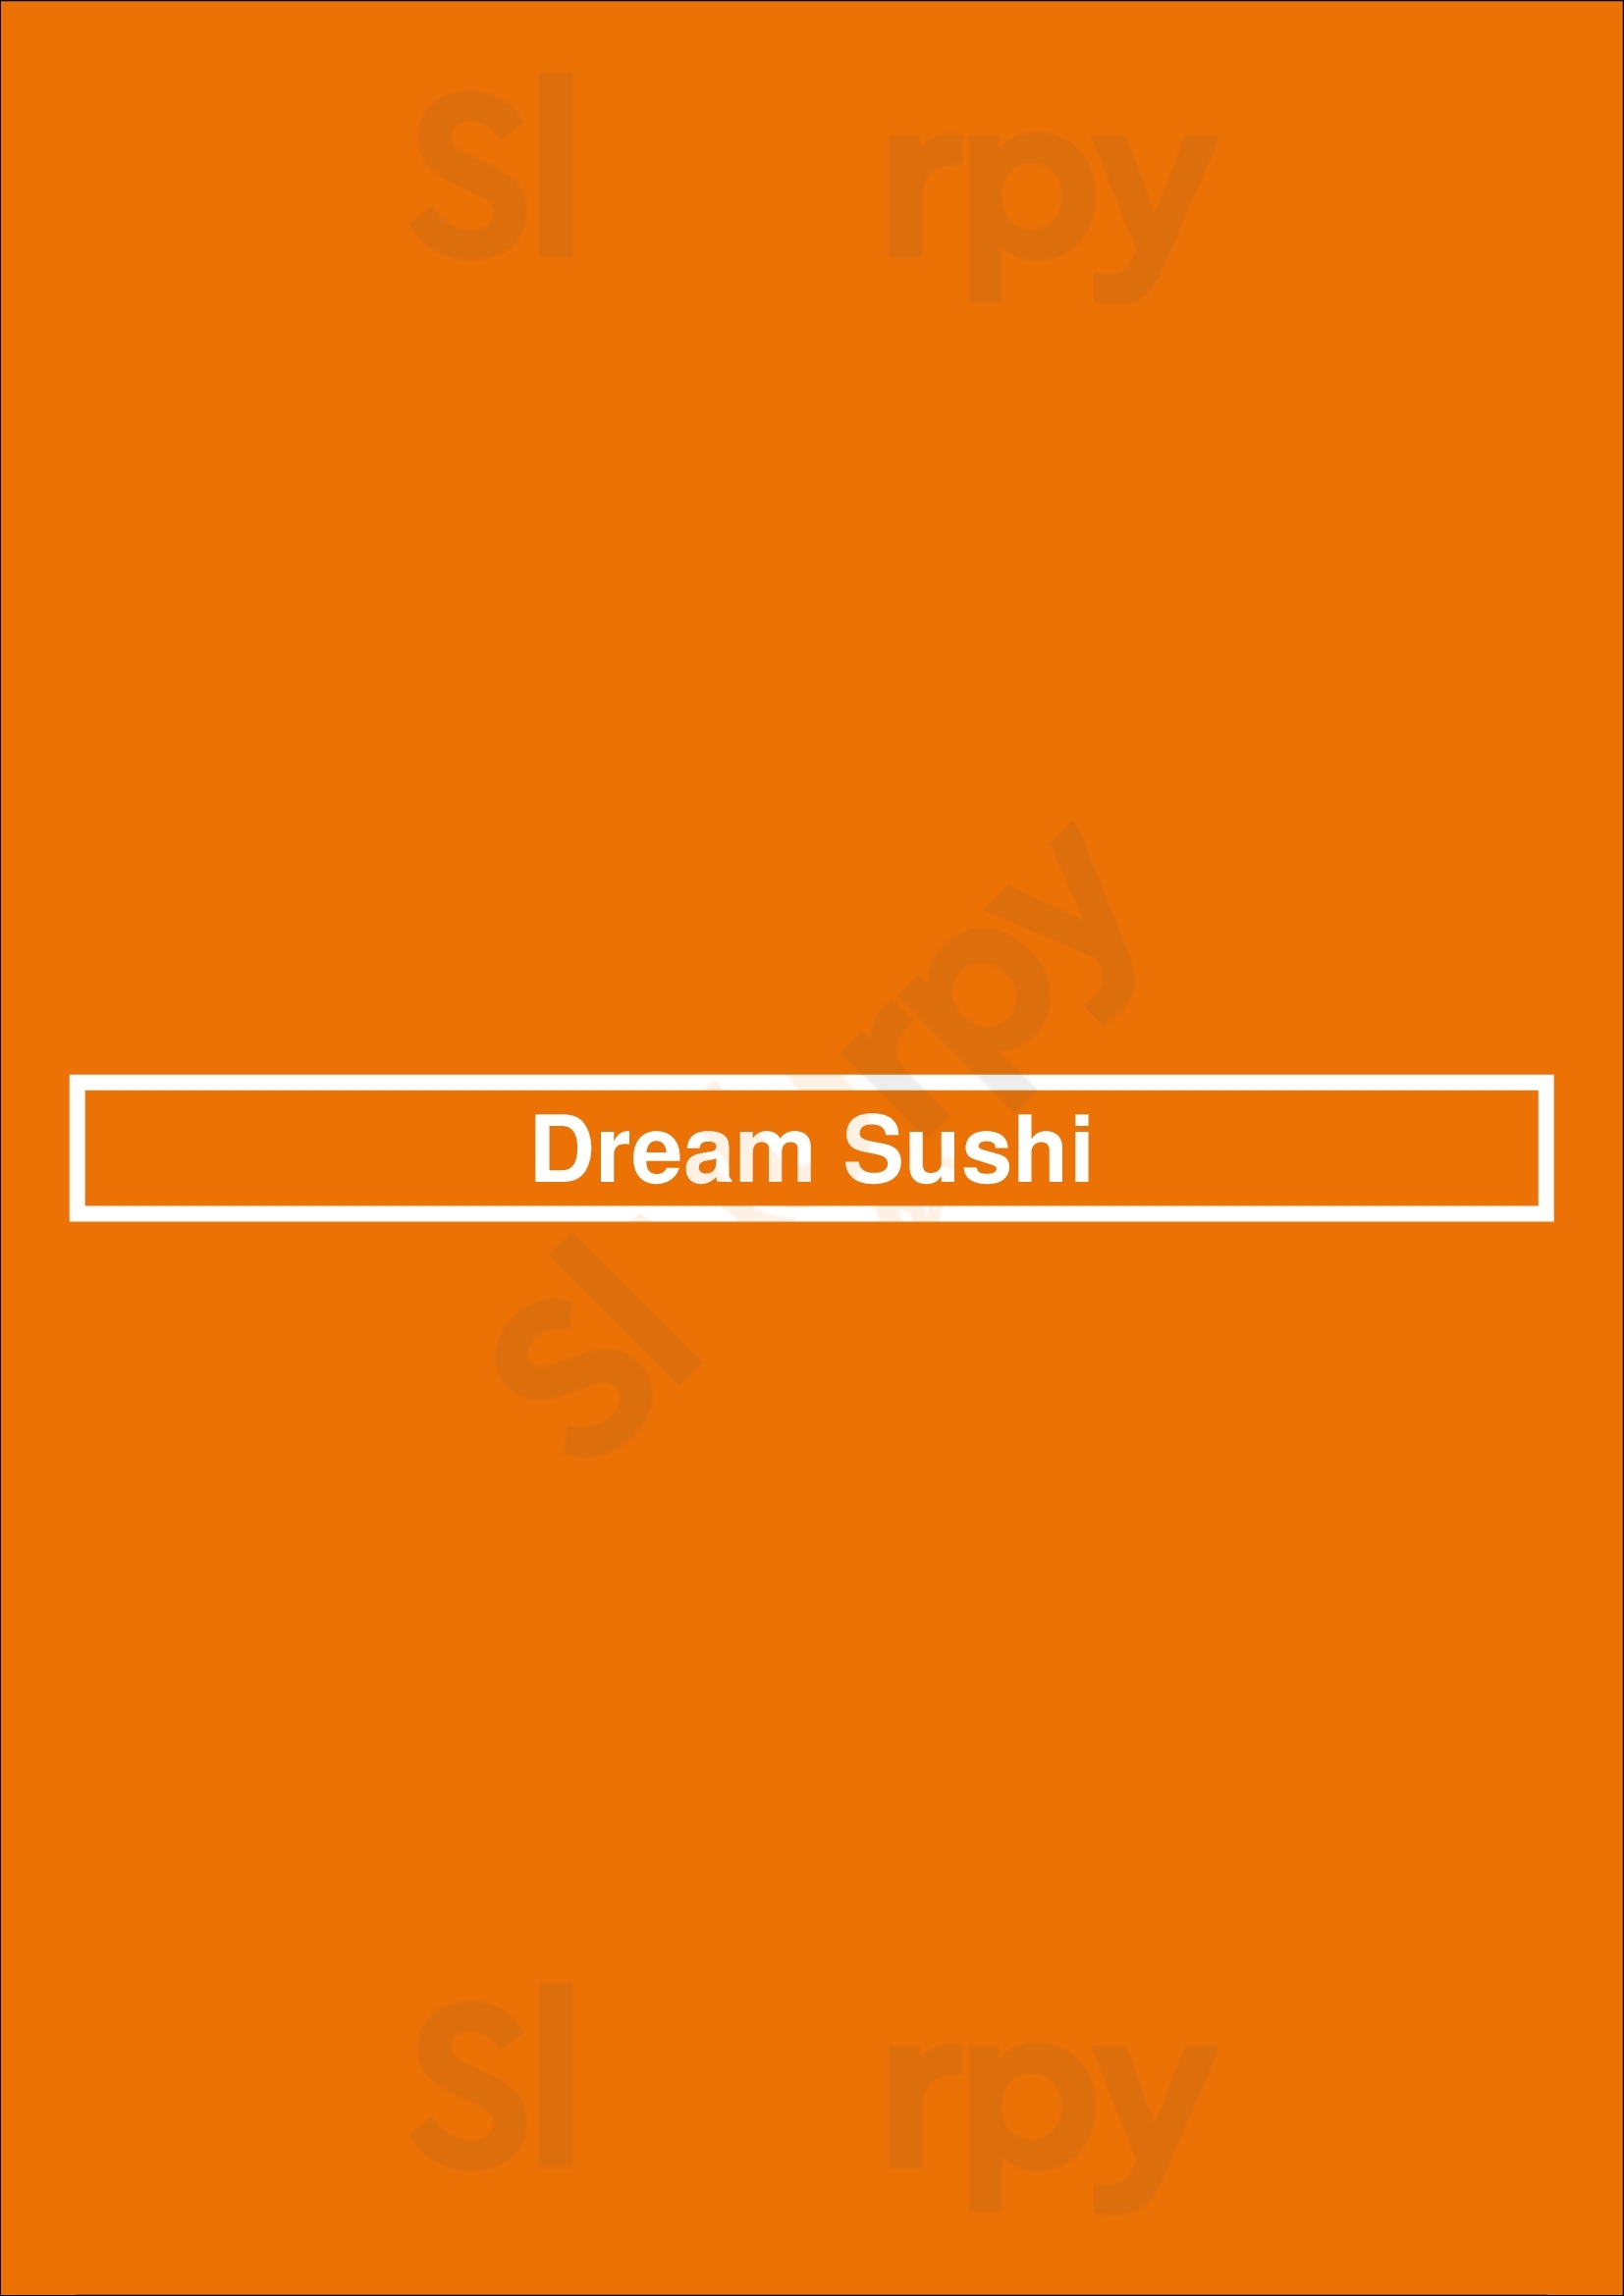 Dream Sushi Vancouver Menu - 1